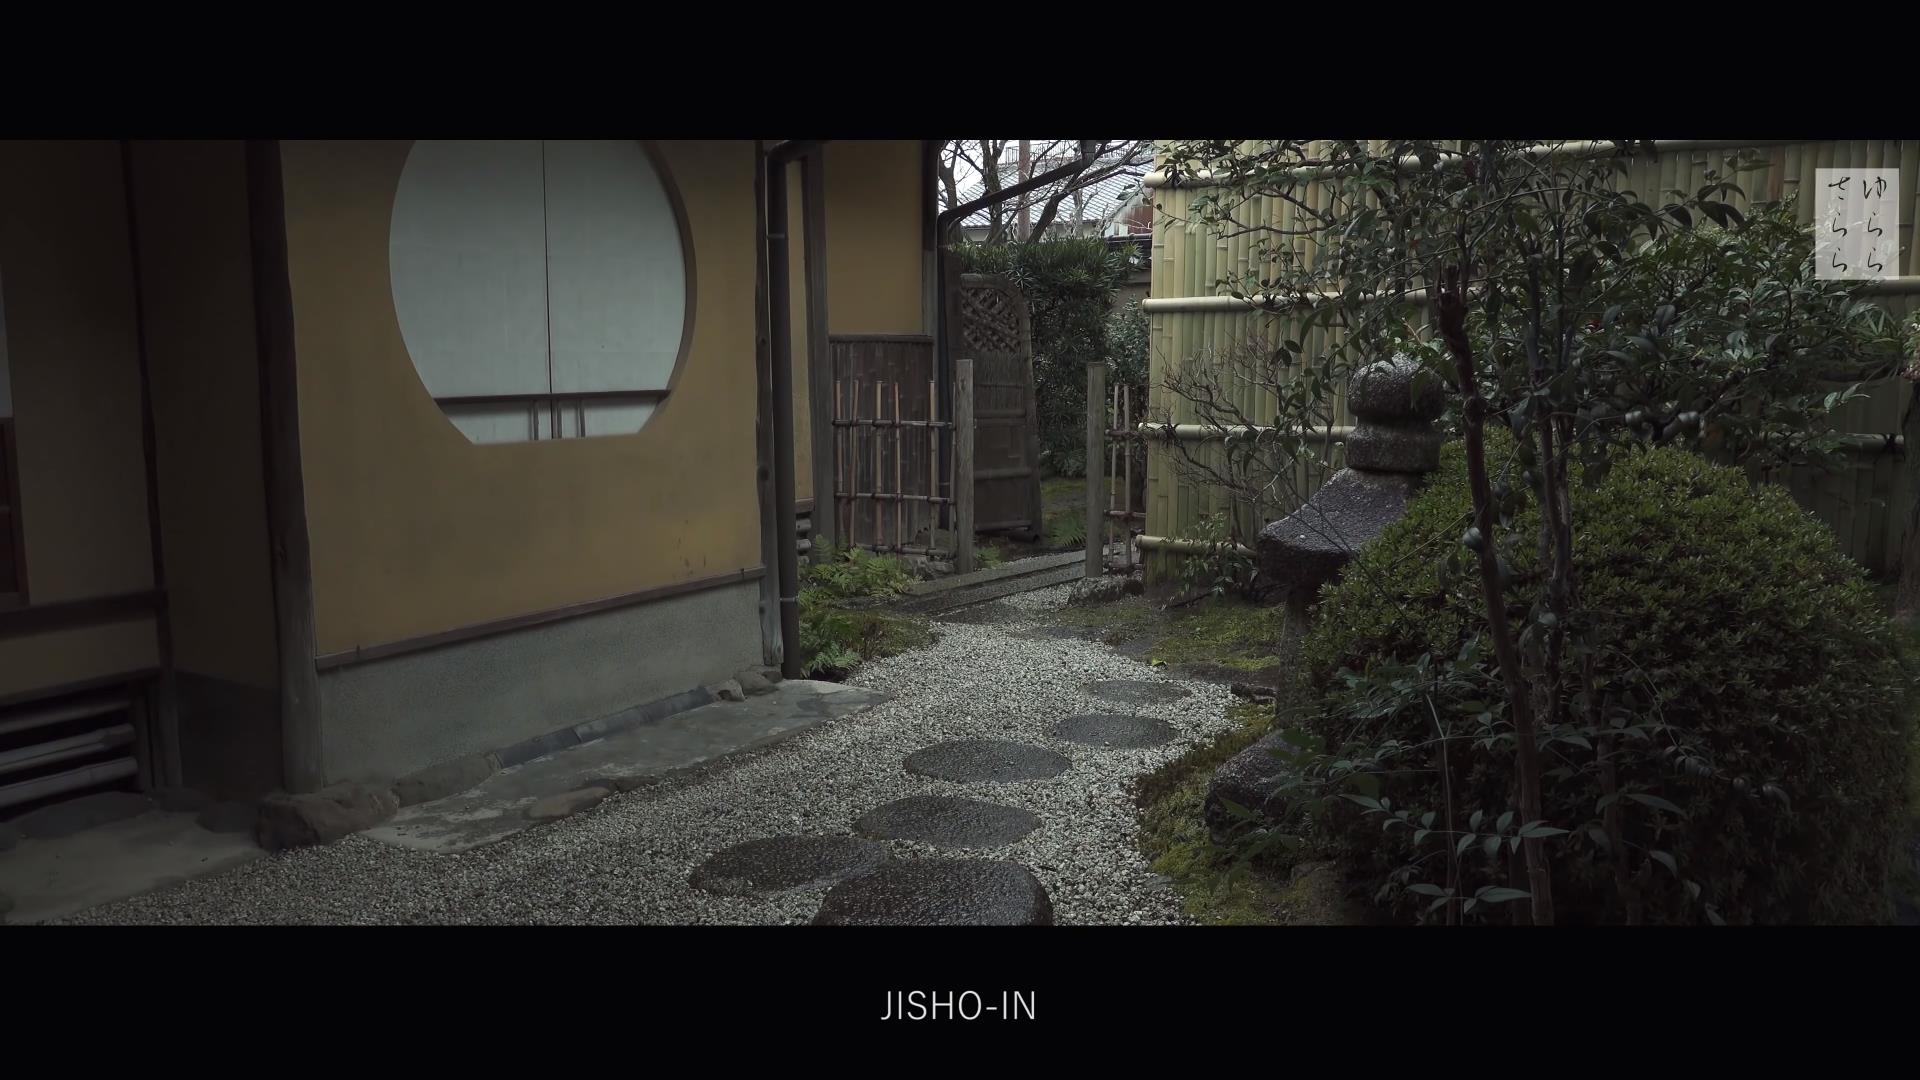 Wabi-Sabi-侘寂庭院,侘寂庭院,日本庭園,侘寂設計,日式侘寂庭院,100 KYOTO GARDENS,京都日本庭園100,侘寂視頻下載